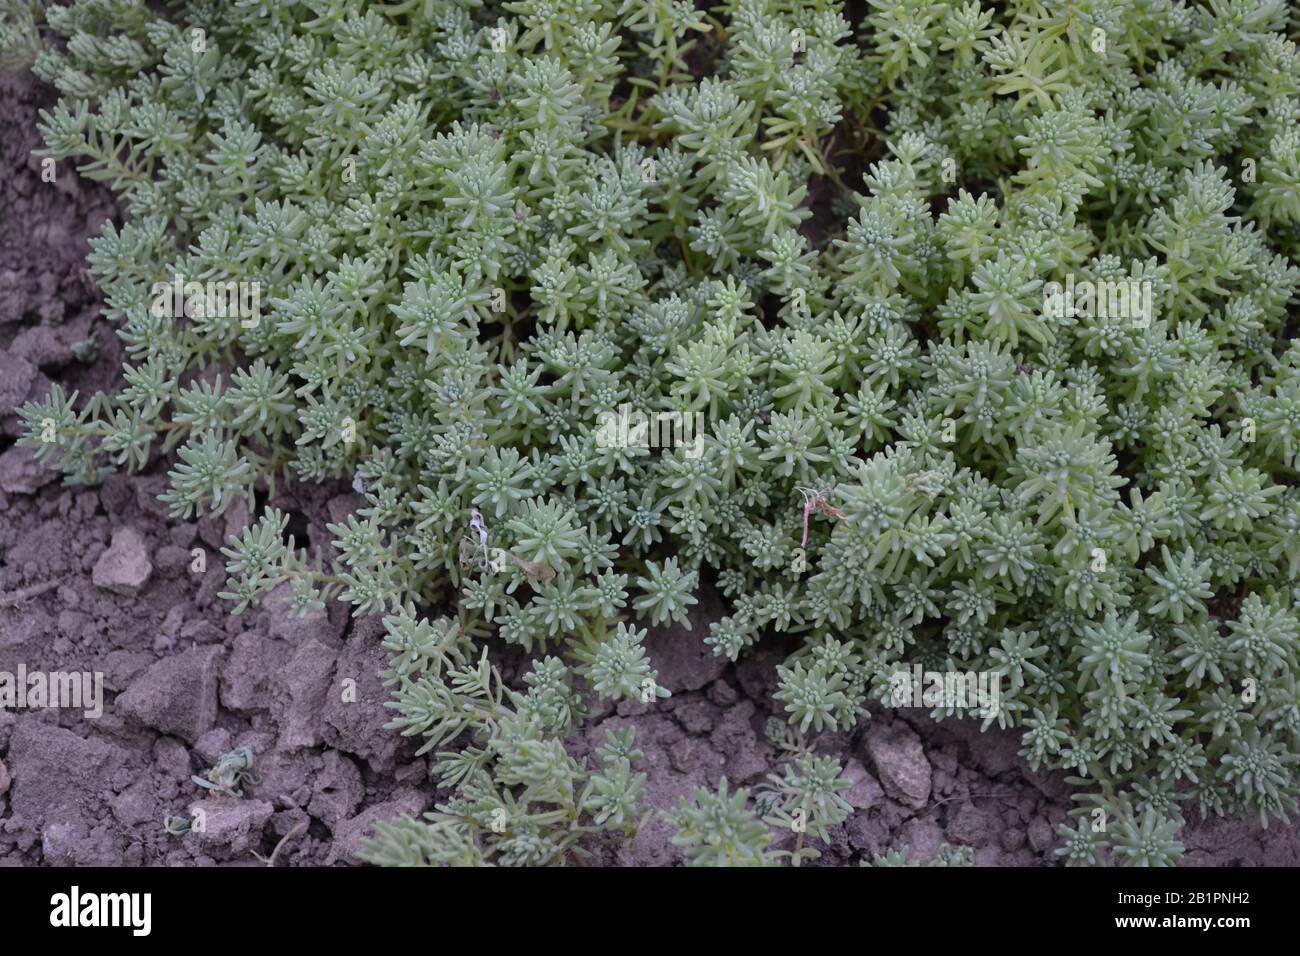 Stonecrop. Hare cabbage. Sedum. Green moss. Decorative grassy carpet. Green flower bed decoration. Garden. A beautiful plant. Horizontal Stock Photo